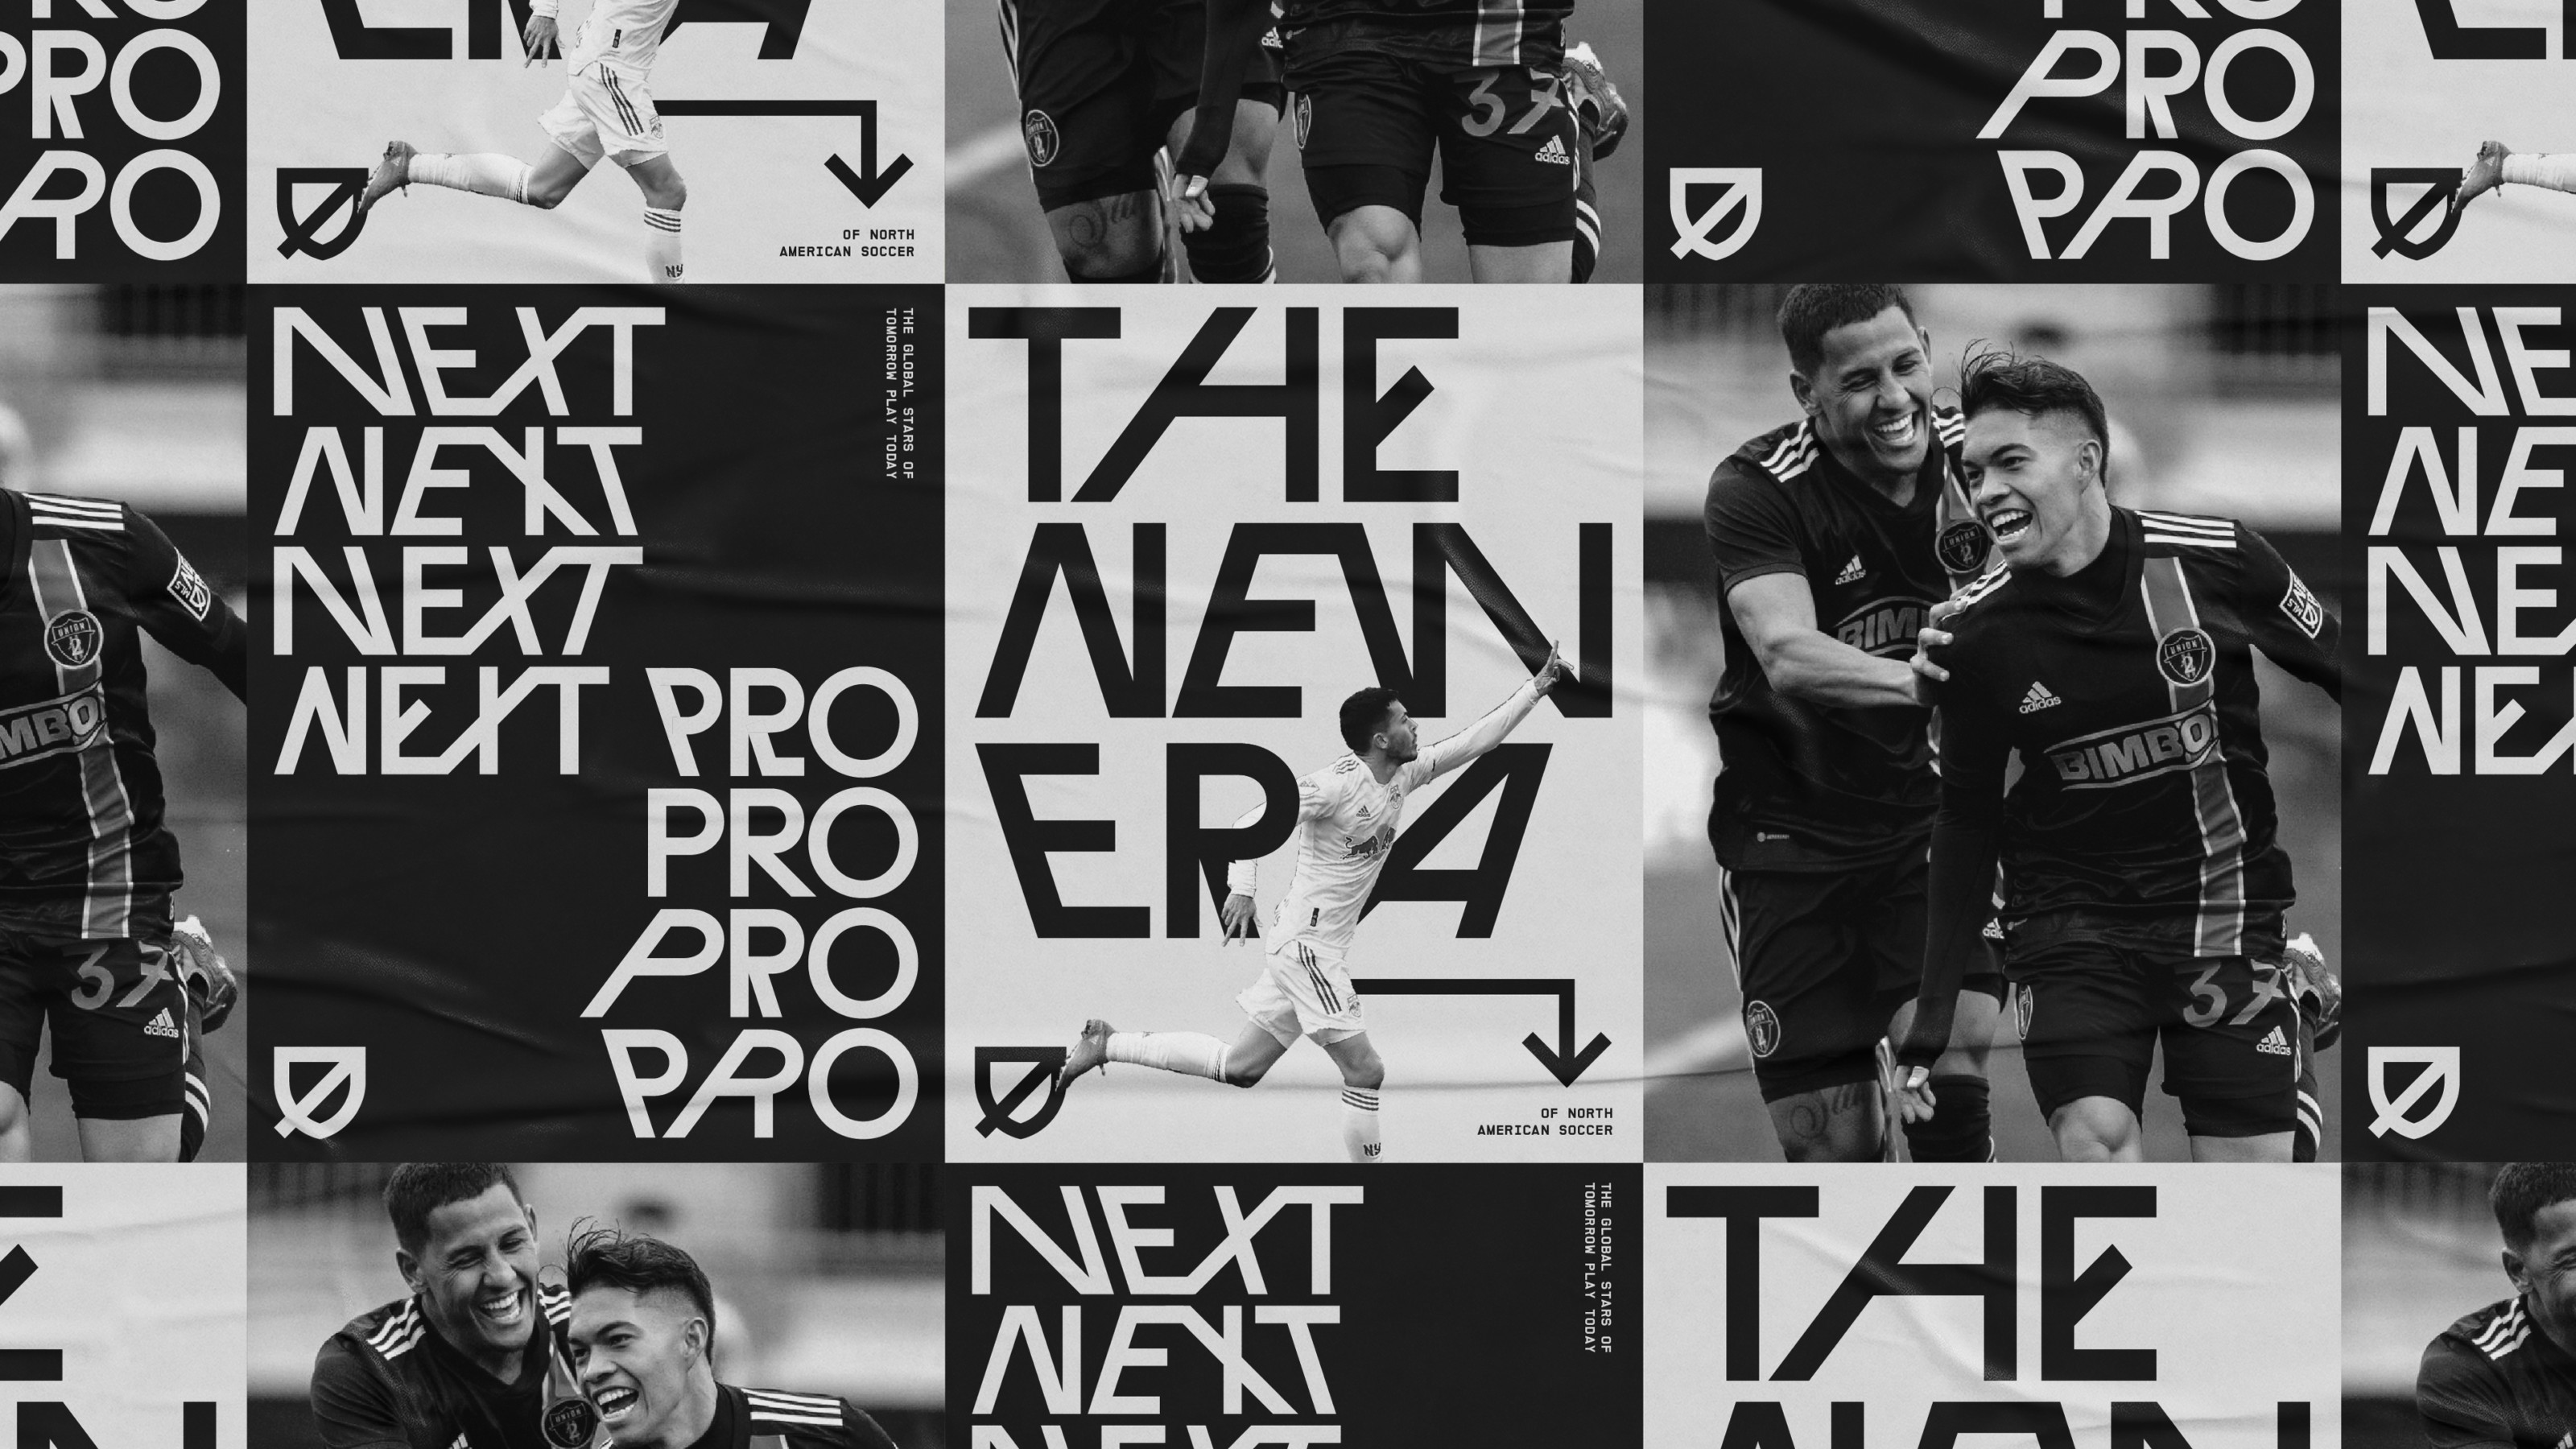 MLS Next Pro wild postings: Next Pro, The New Era